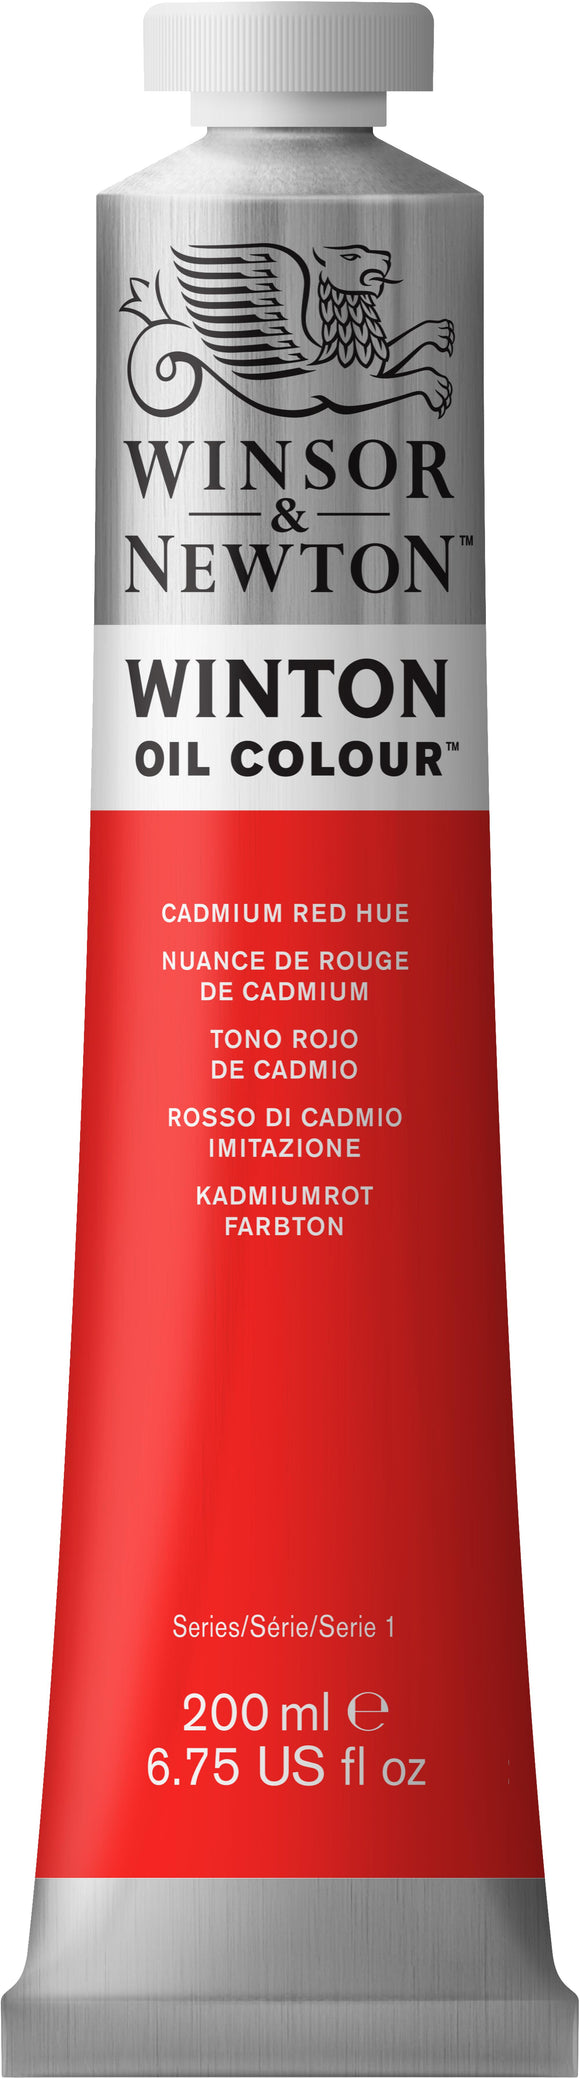 Winsor & Newton Winton Oil Colour Cadmium Red Hue 200Ml